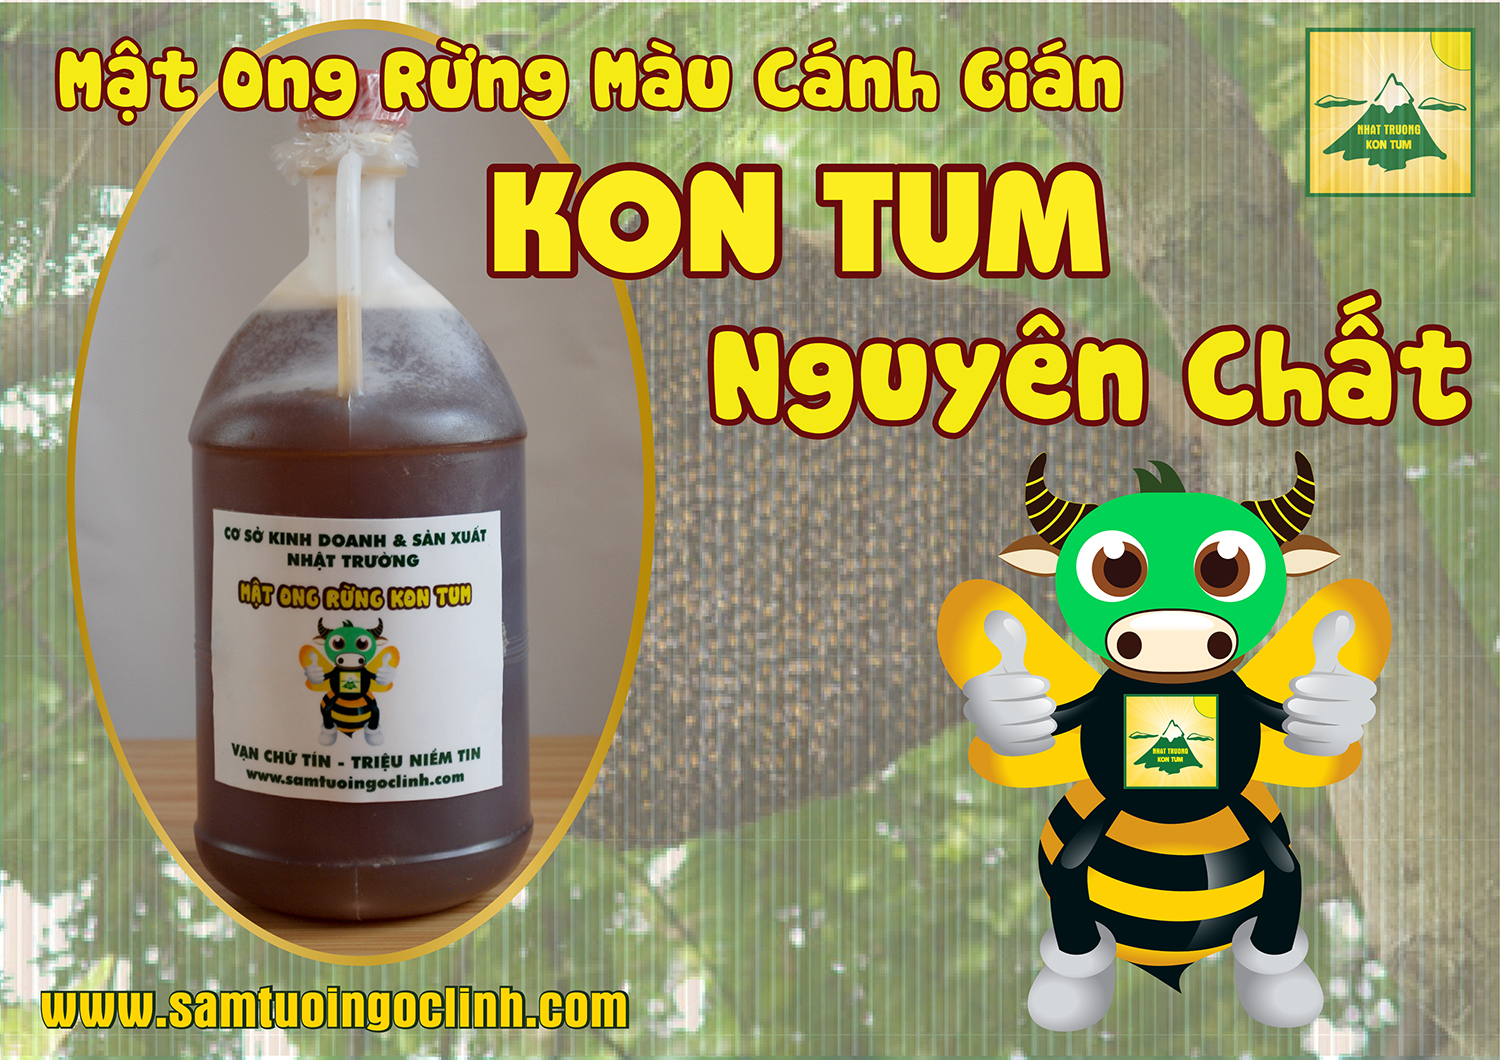 mật ong rừng kon tum